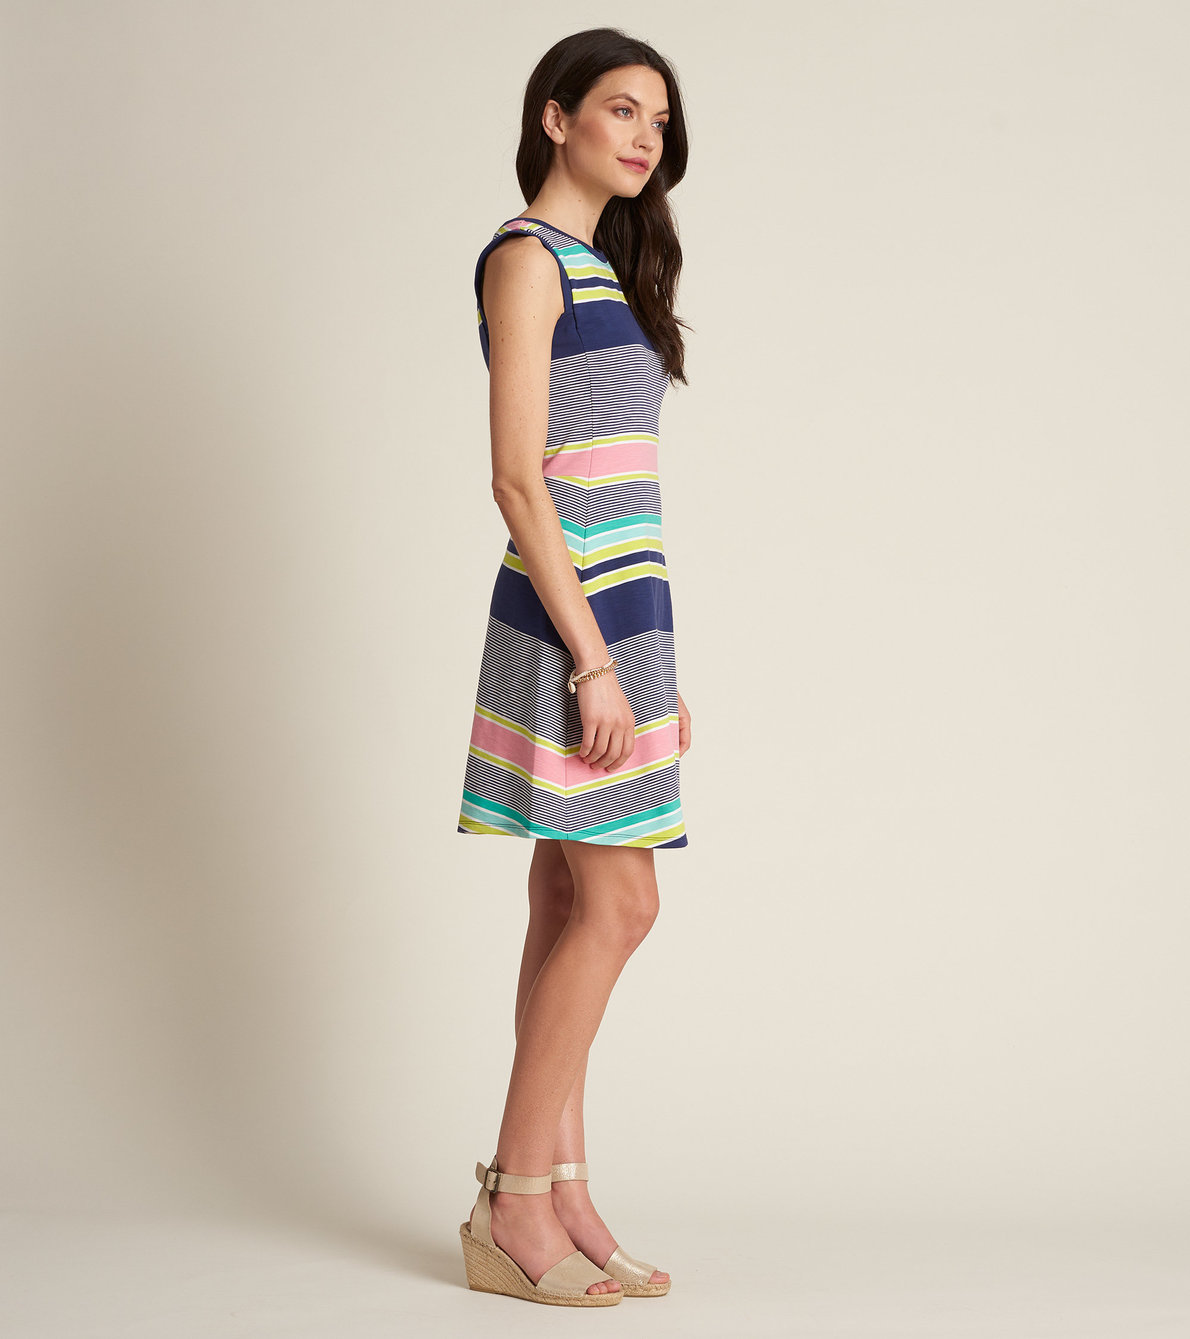 View larger image of Sarah Dress - Gradient Stripes